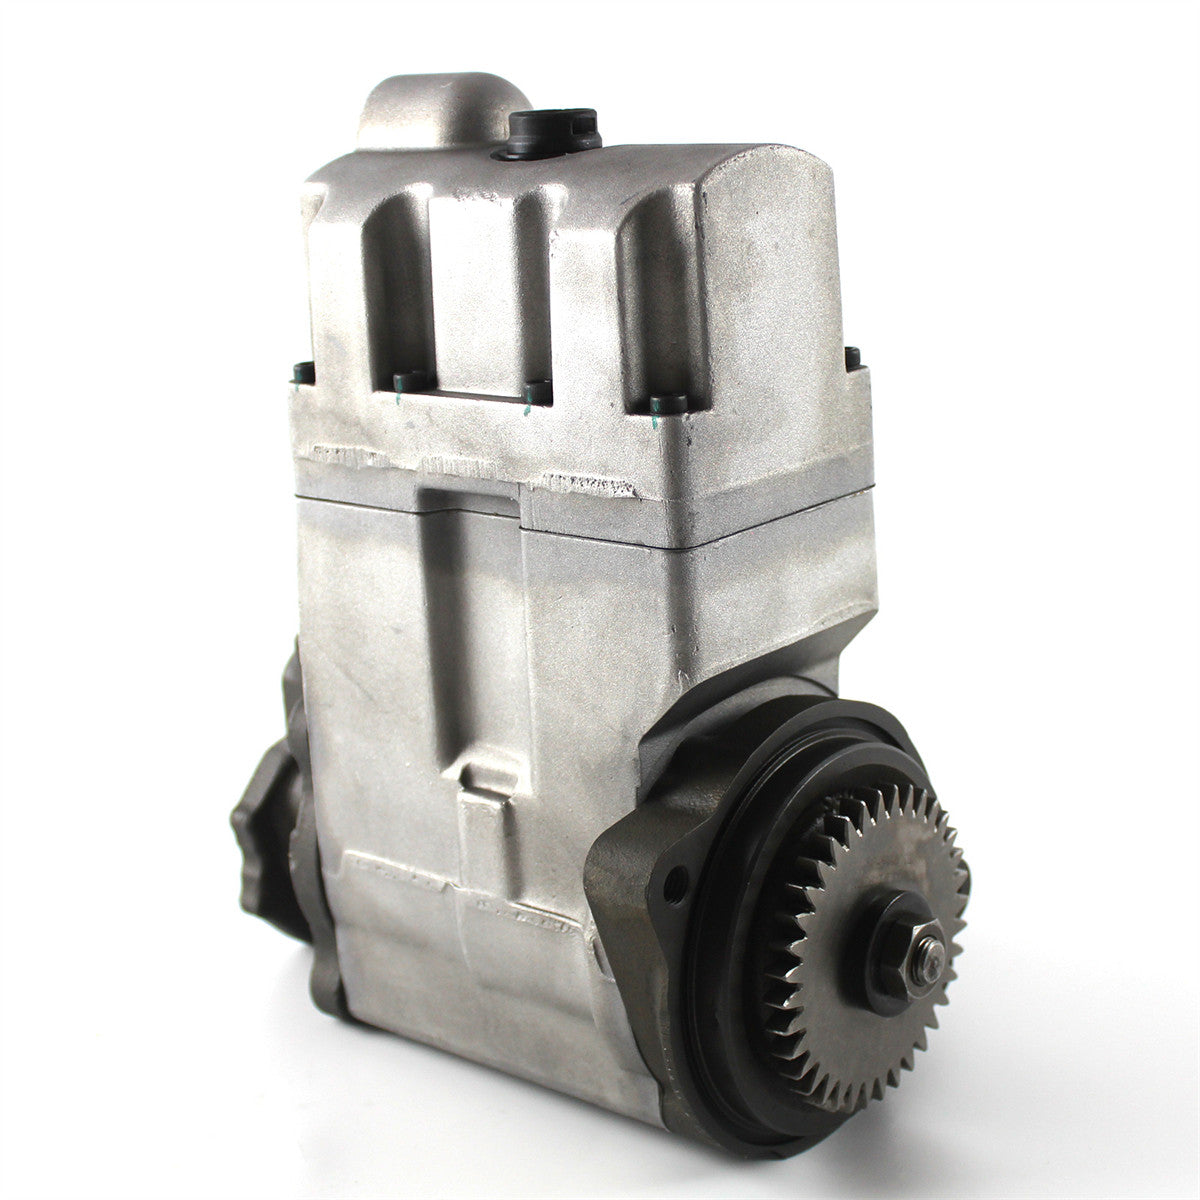 319-0676 204-4945 Fuel Injection Pump for Caterpillar C-9 Engine E330C - Sinocmp 